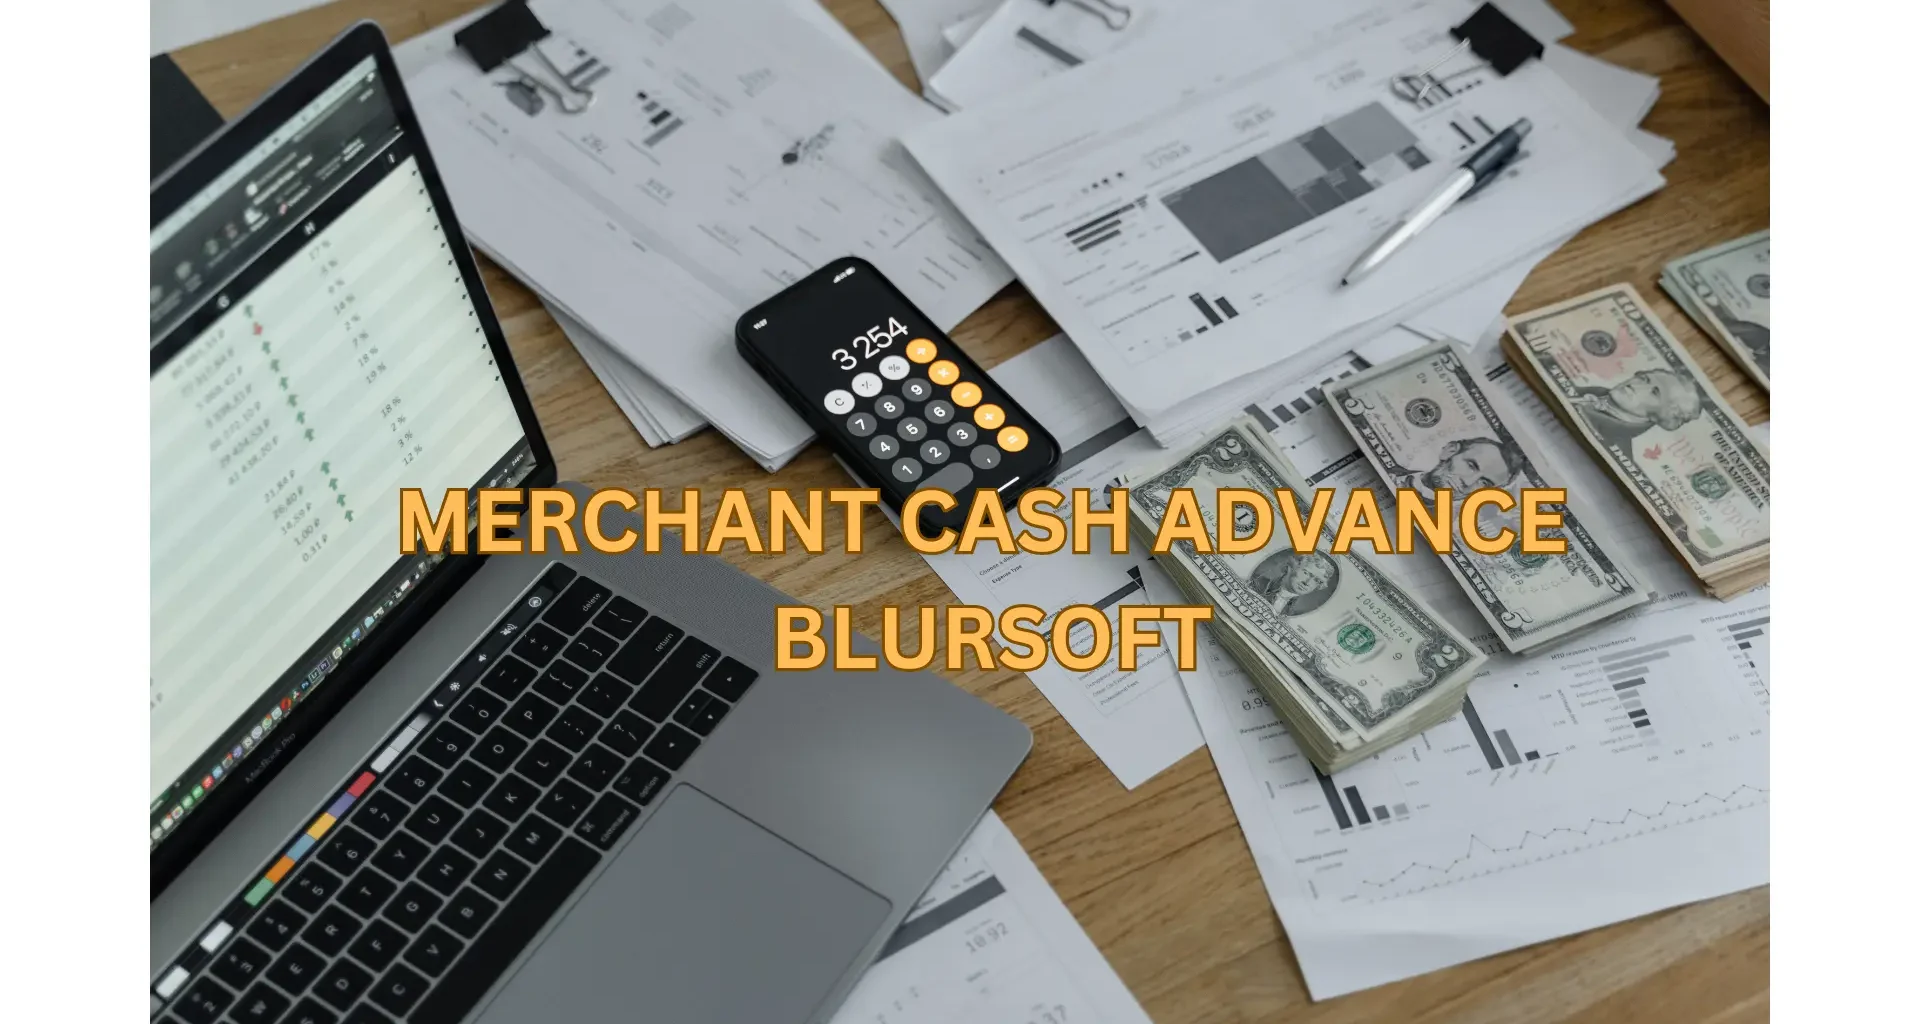 Merchant cash advance blursoft